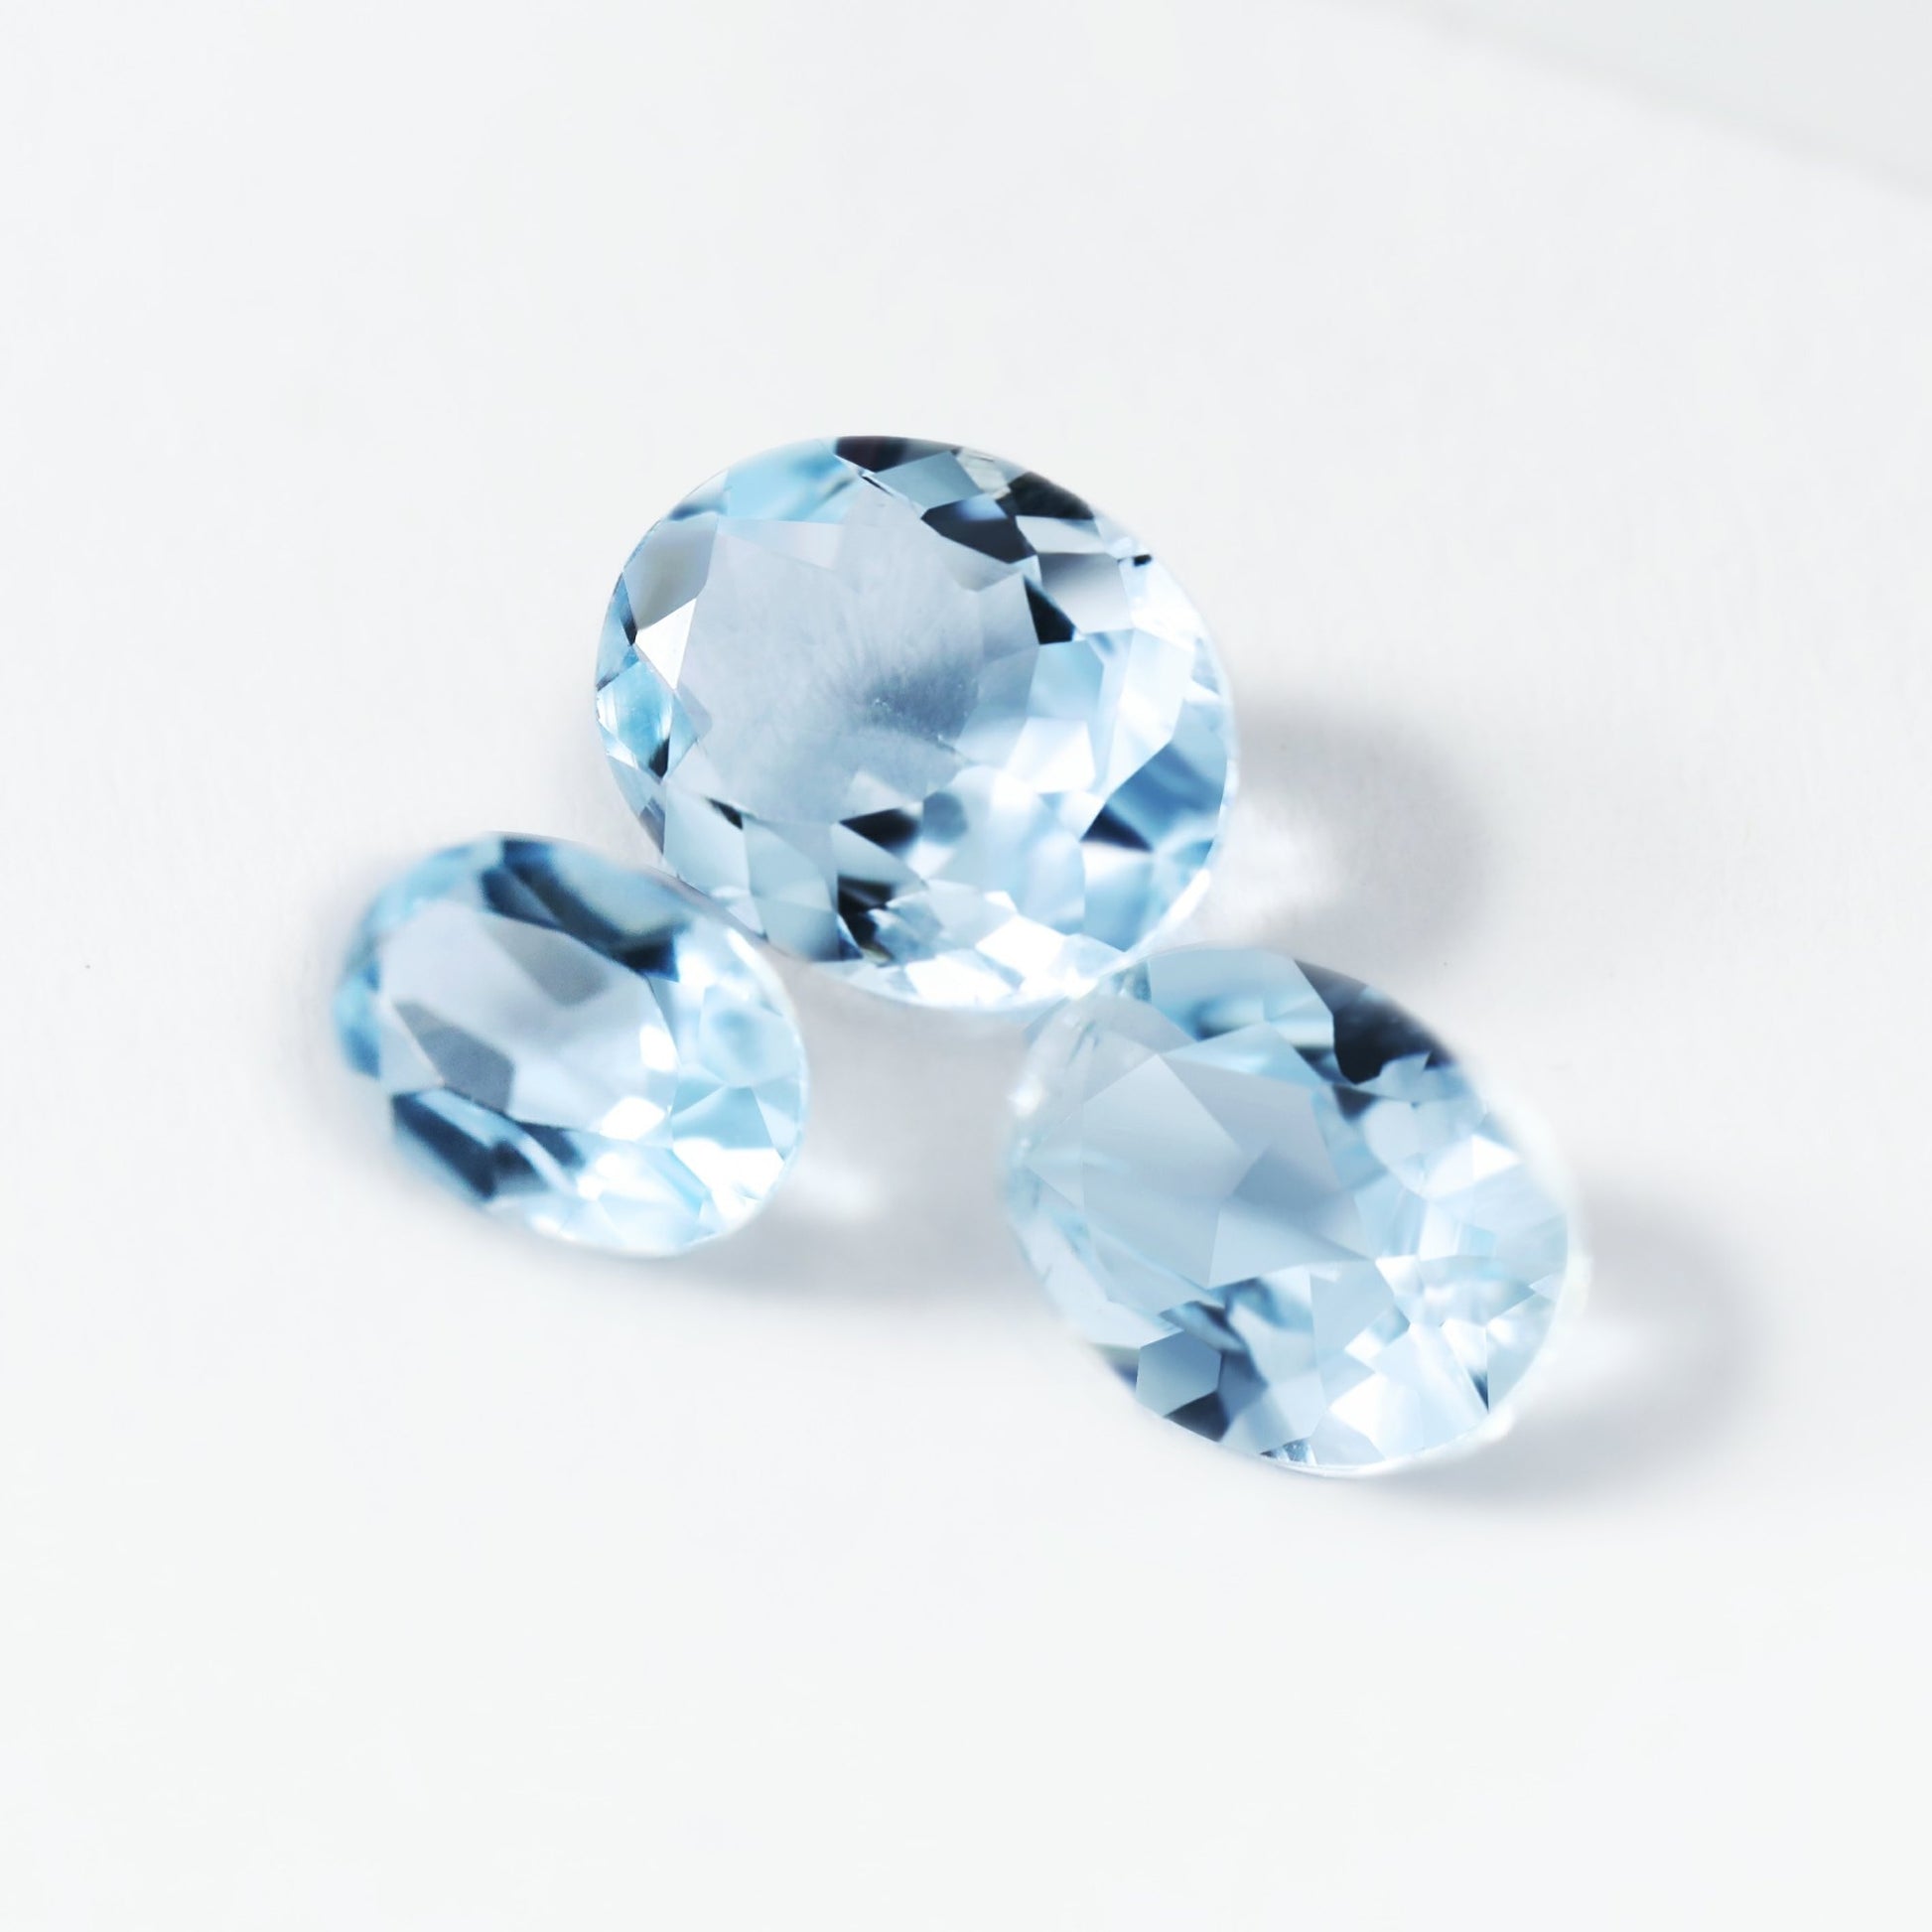 3 light blue oval aquamarine gems.